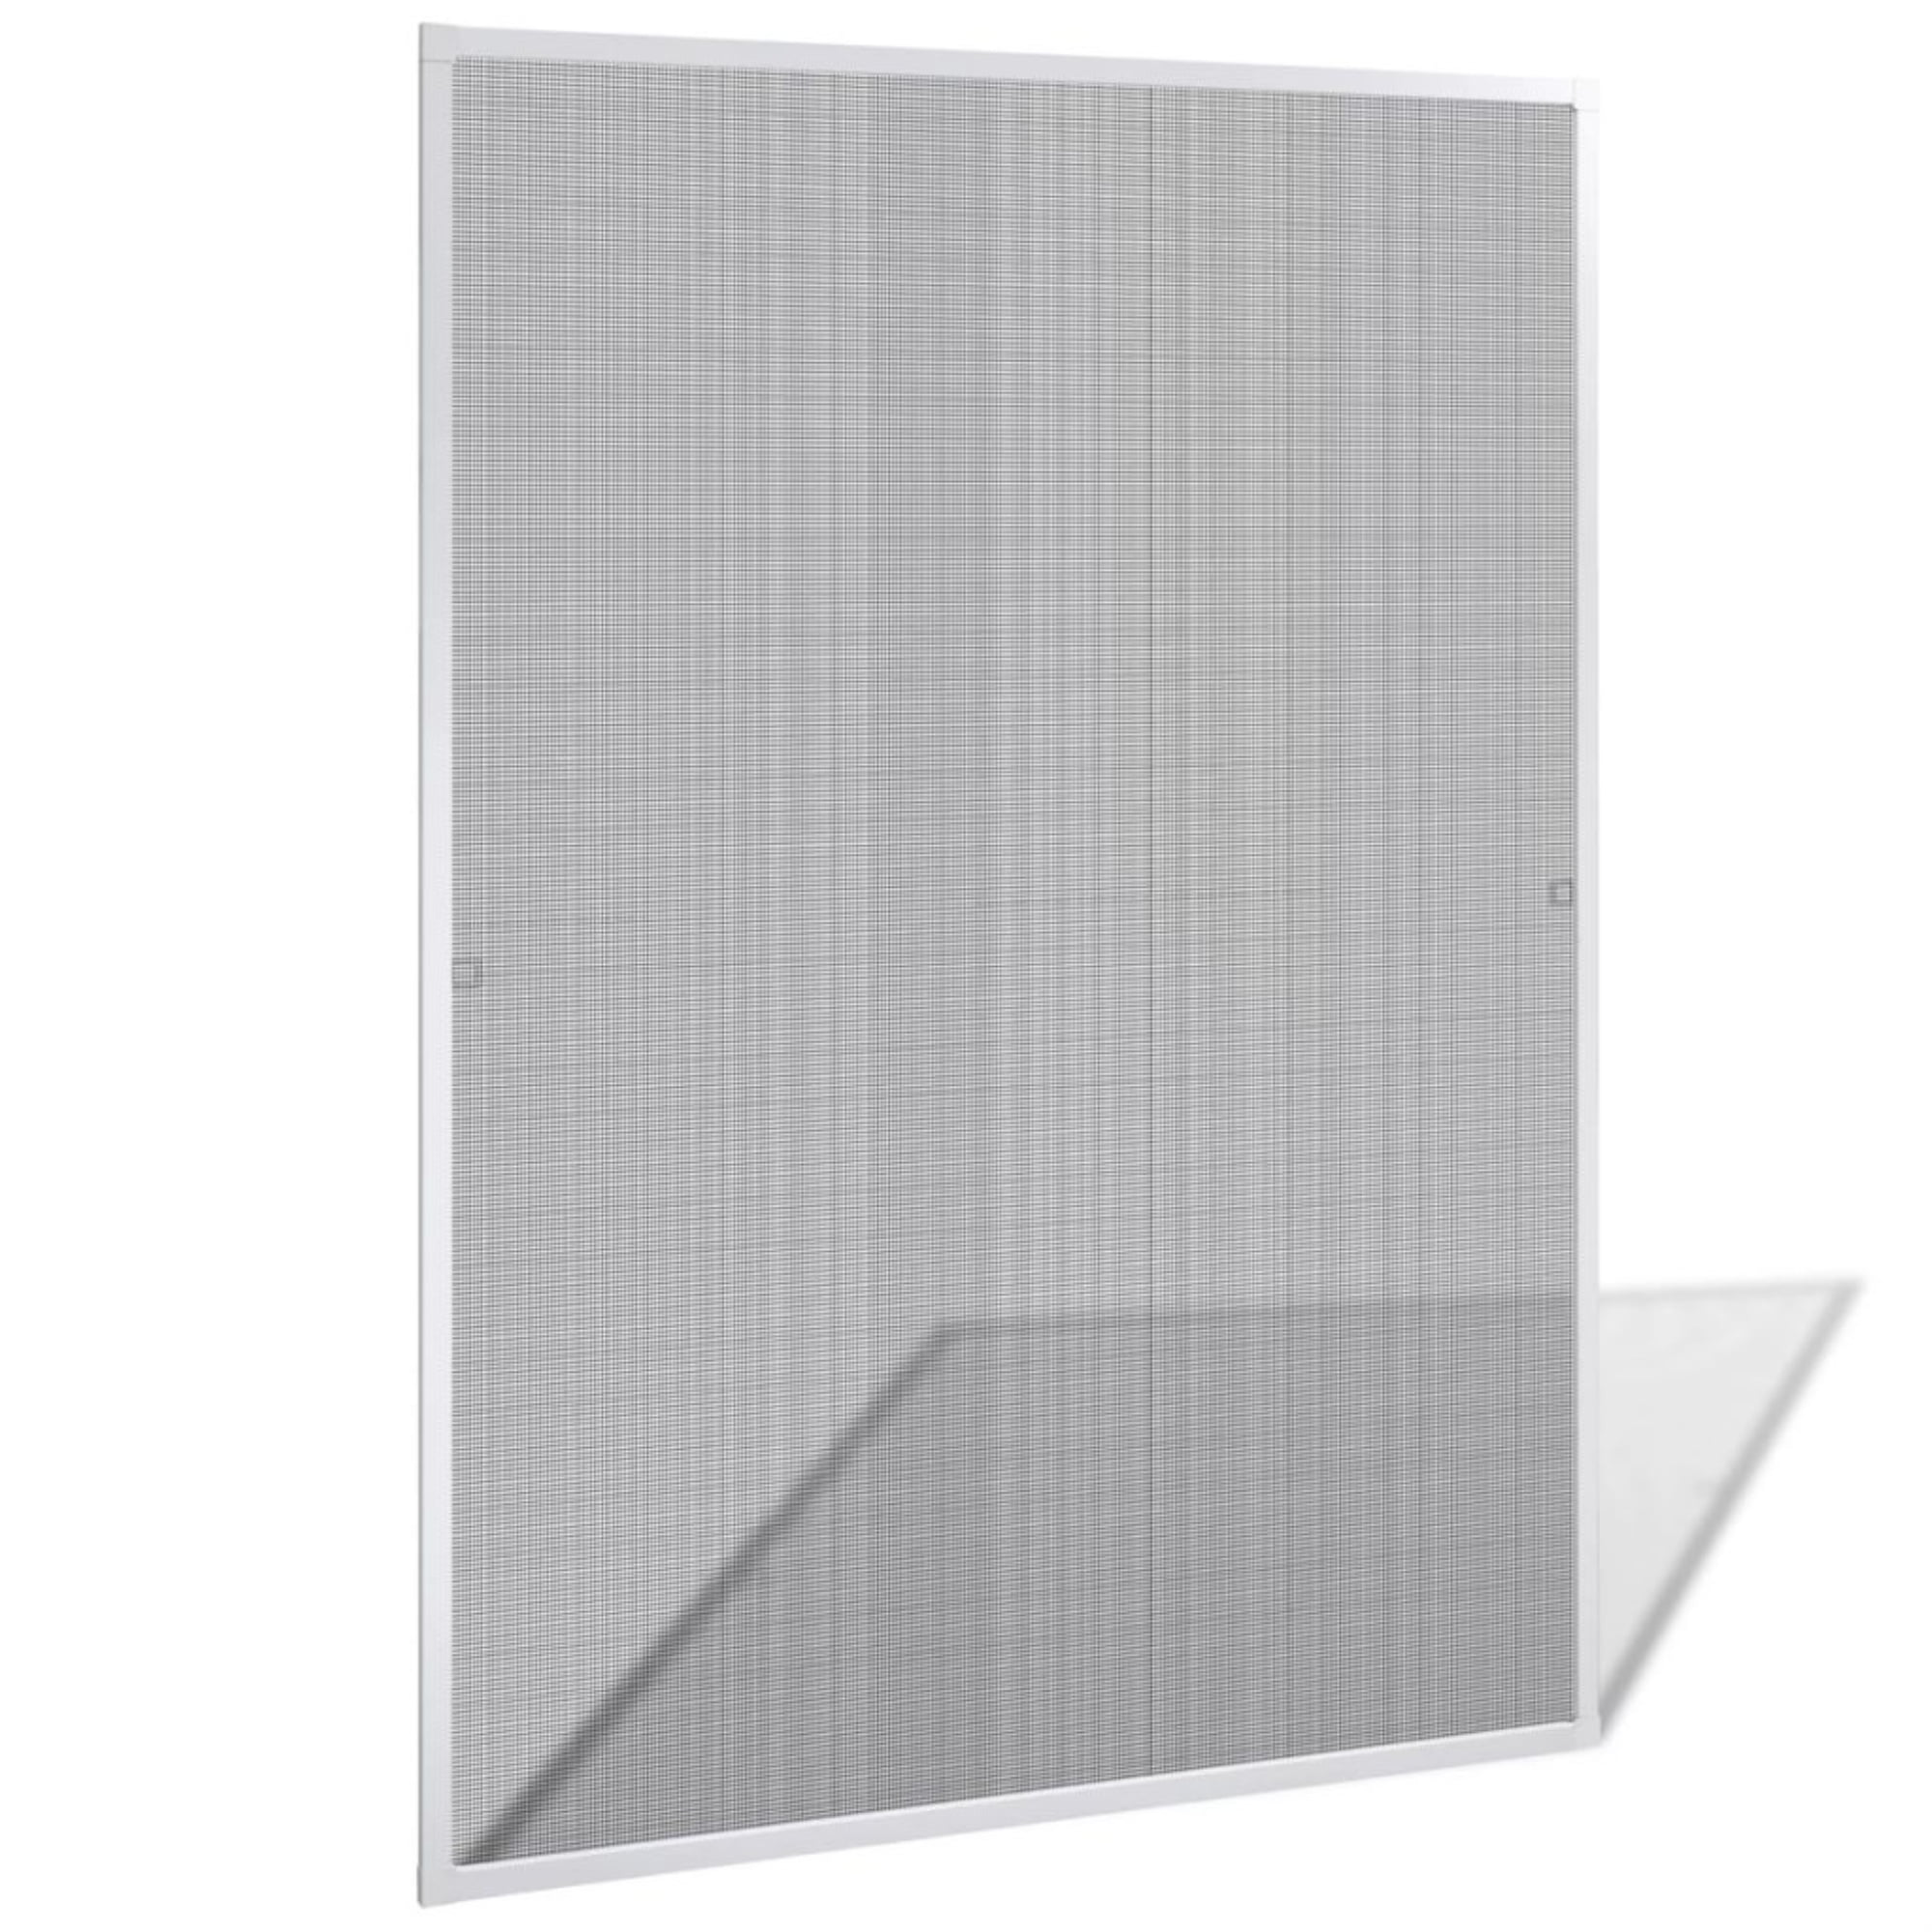 2 Pack 18" x 20"Aluminum Screen Printing Screens With 130 mesh count